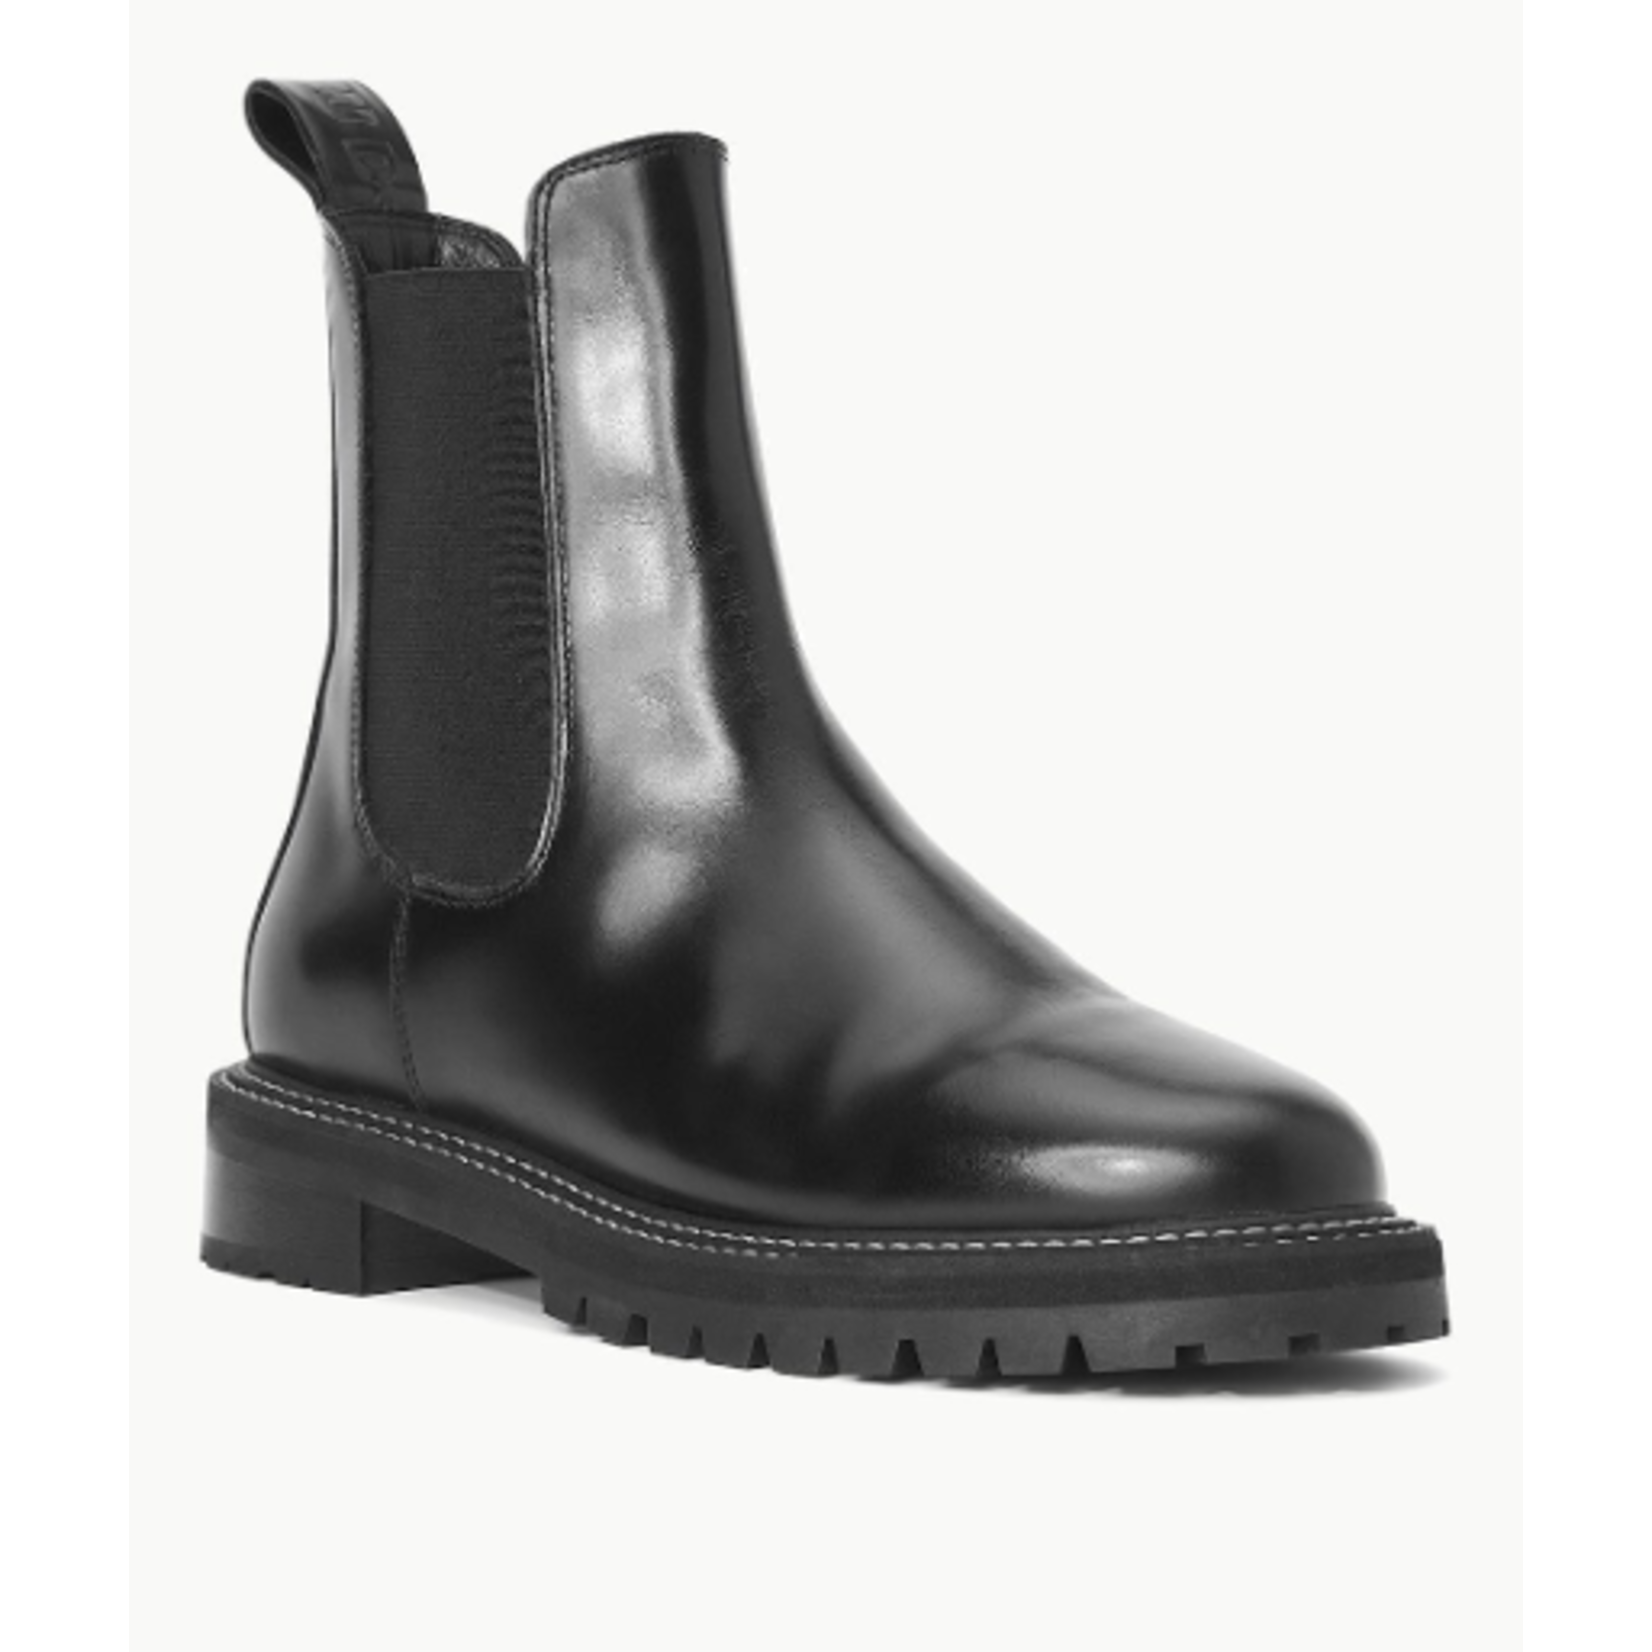 Nova Staud Dutch Boot, Black, Size 9